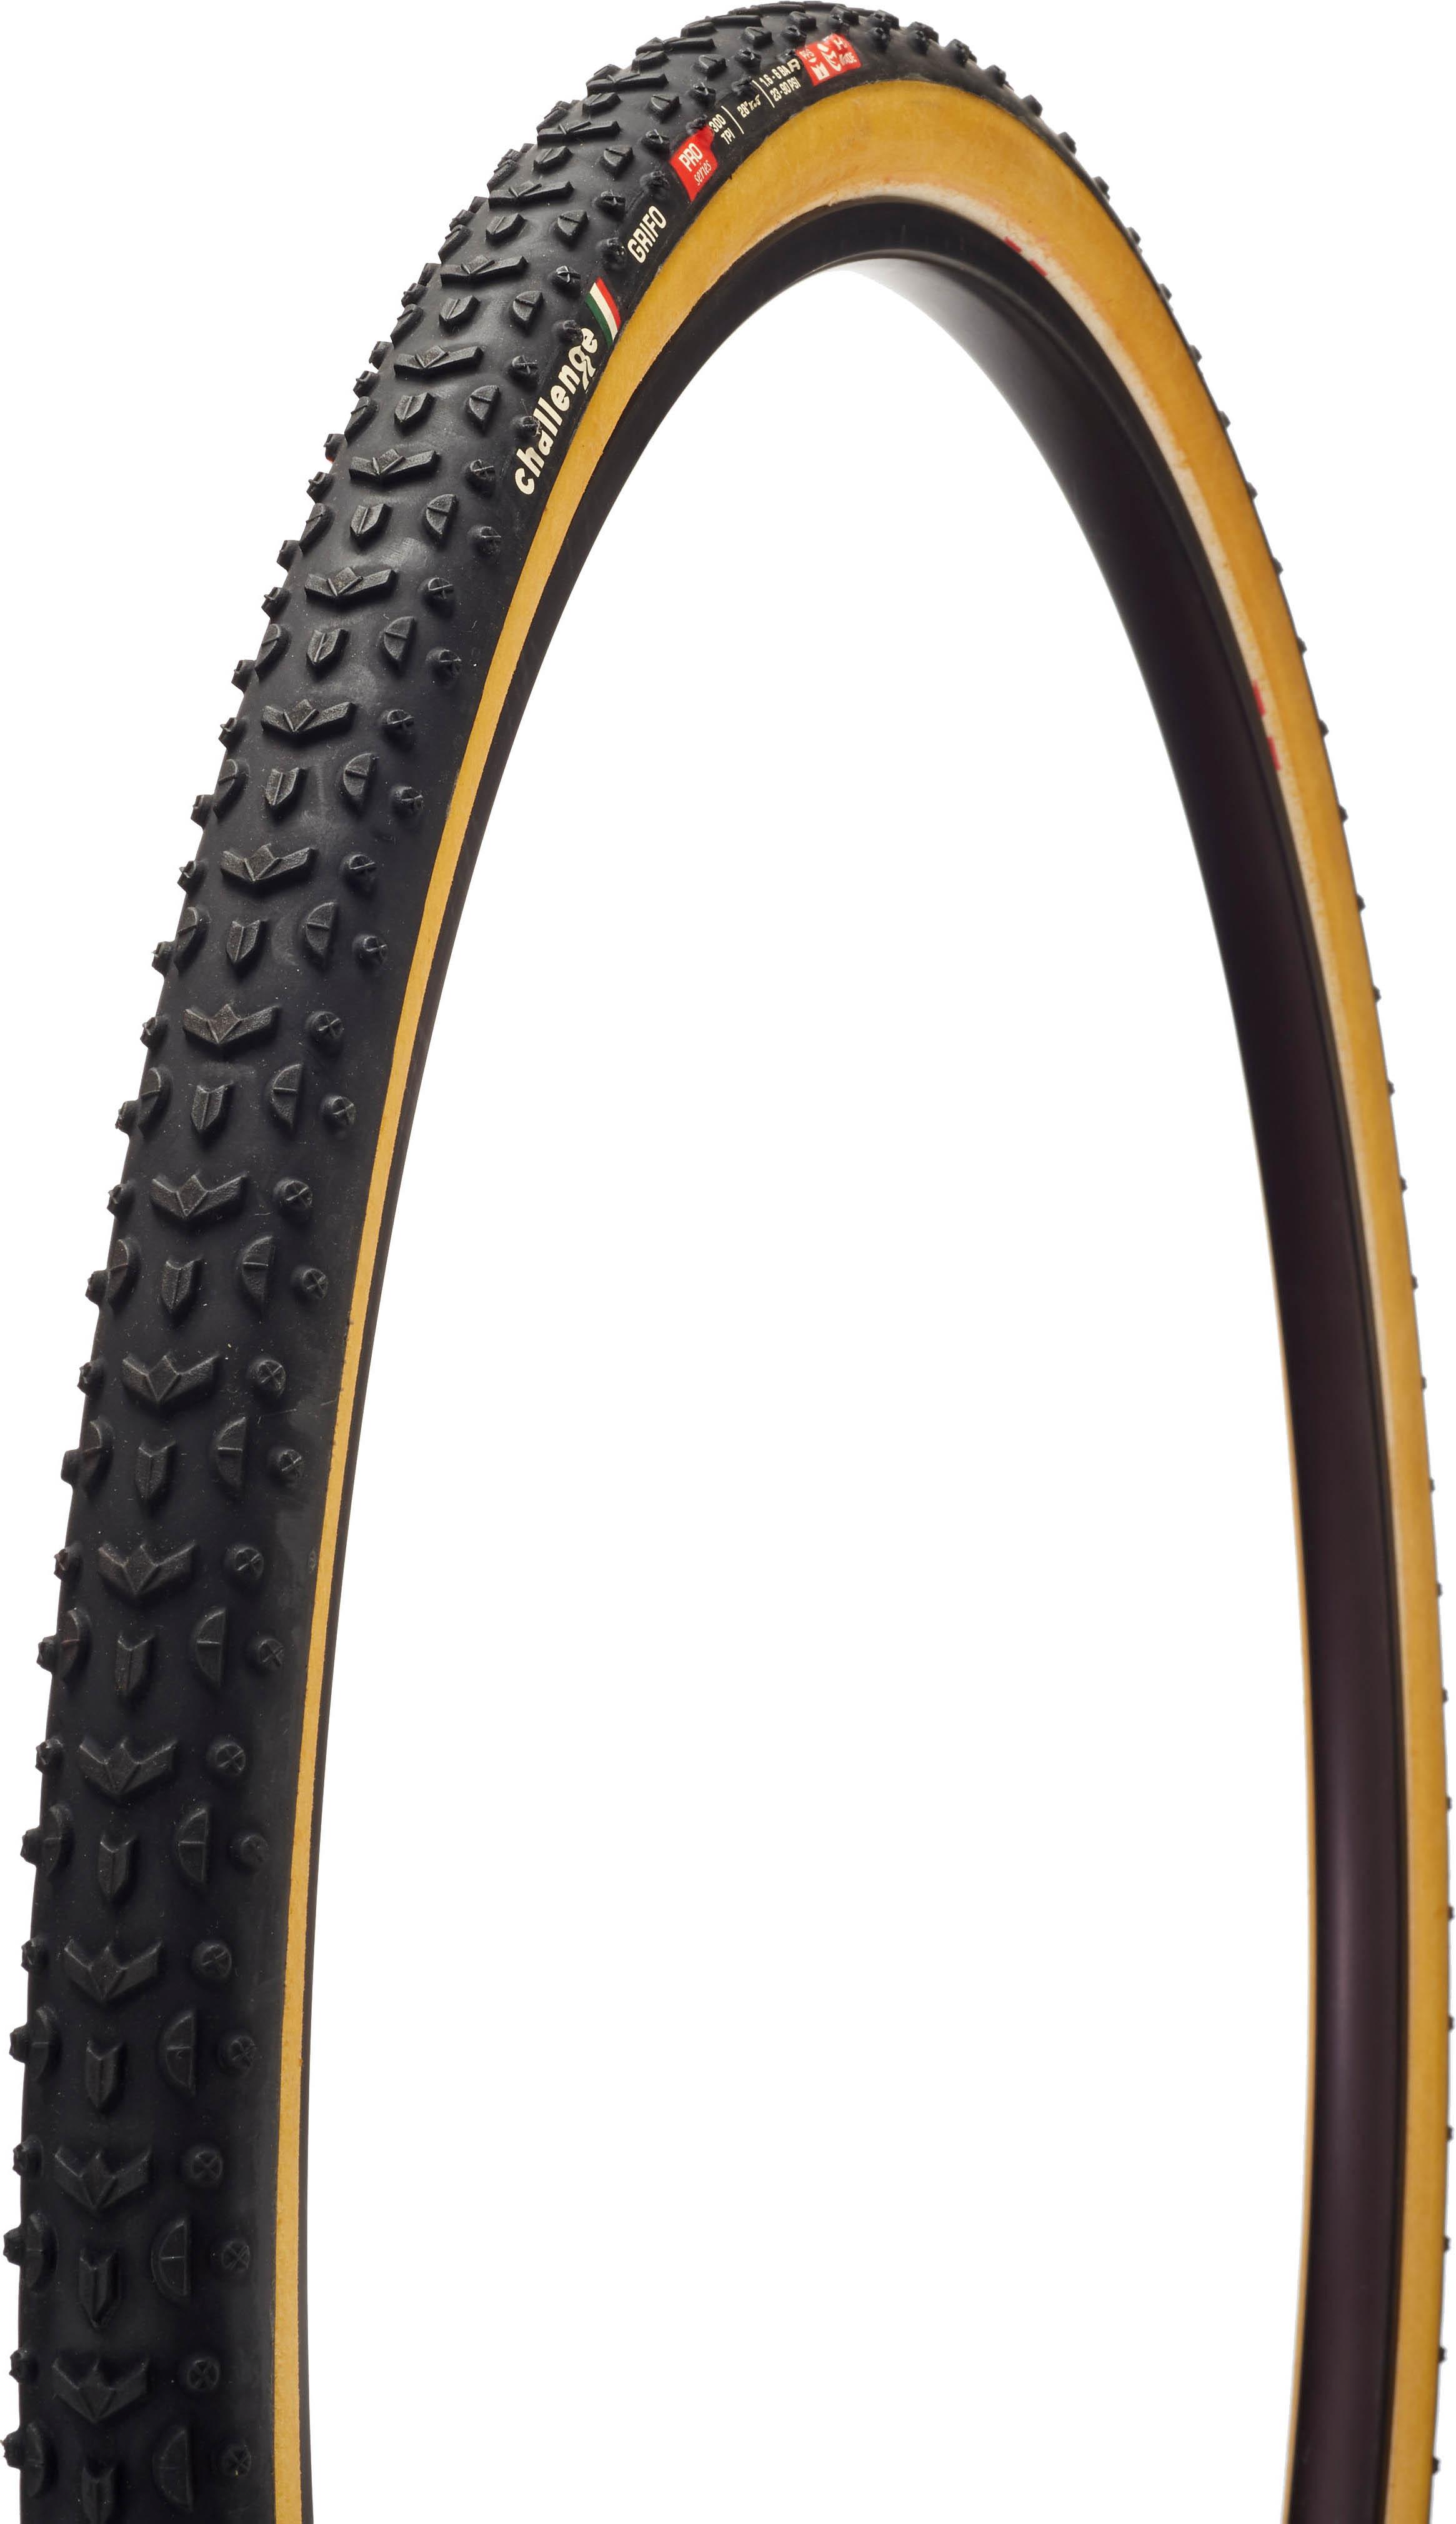 Challenge Grifo 33 Open Tubular Cyclocross Tyre - Black/tan Wall